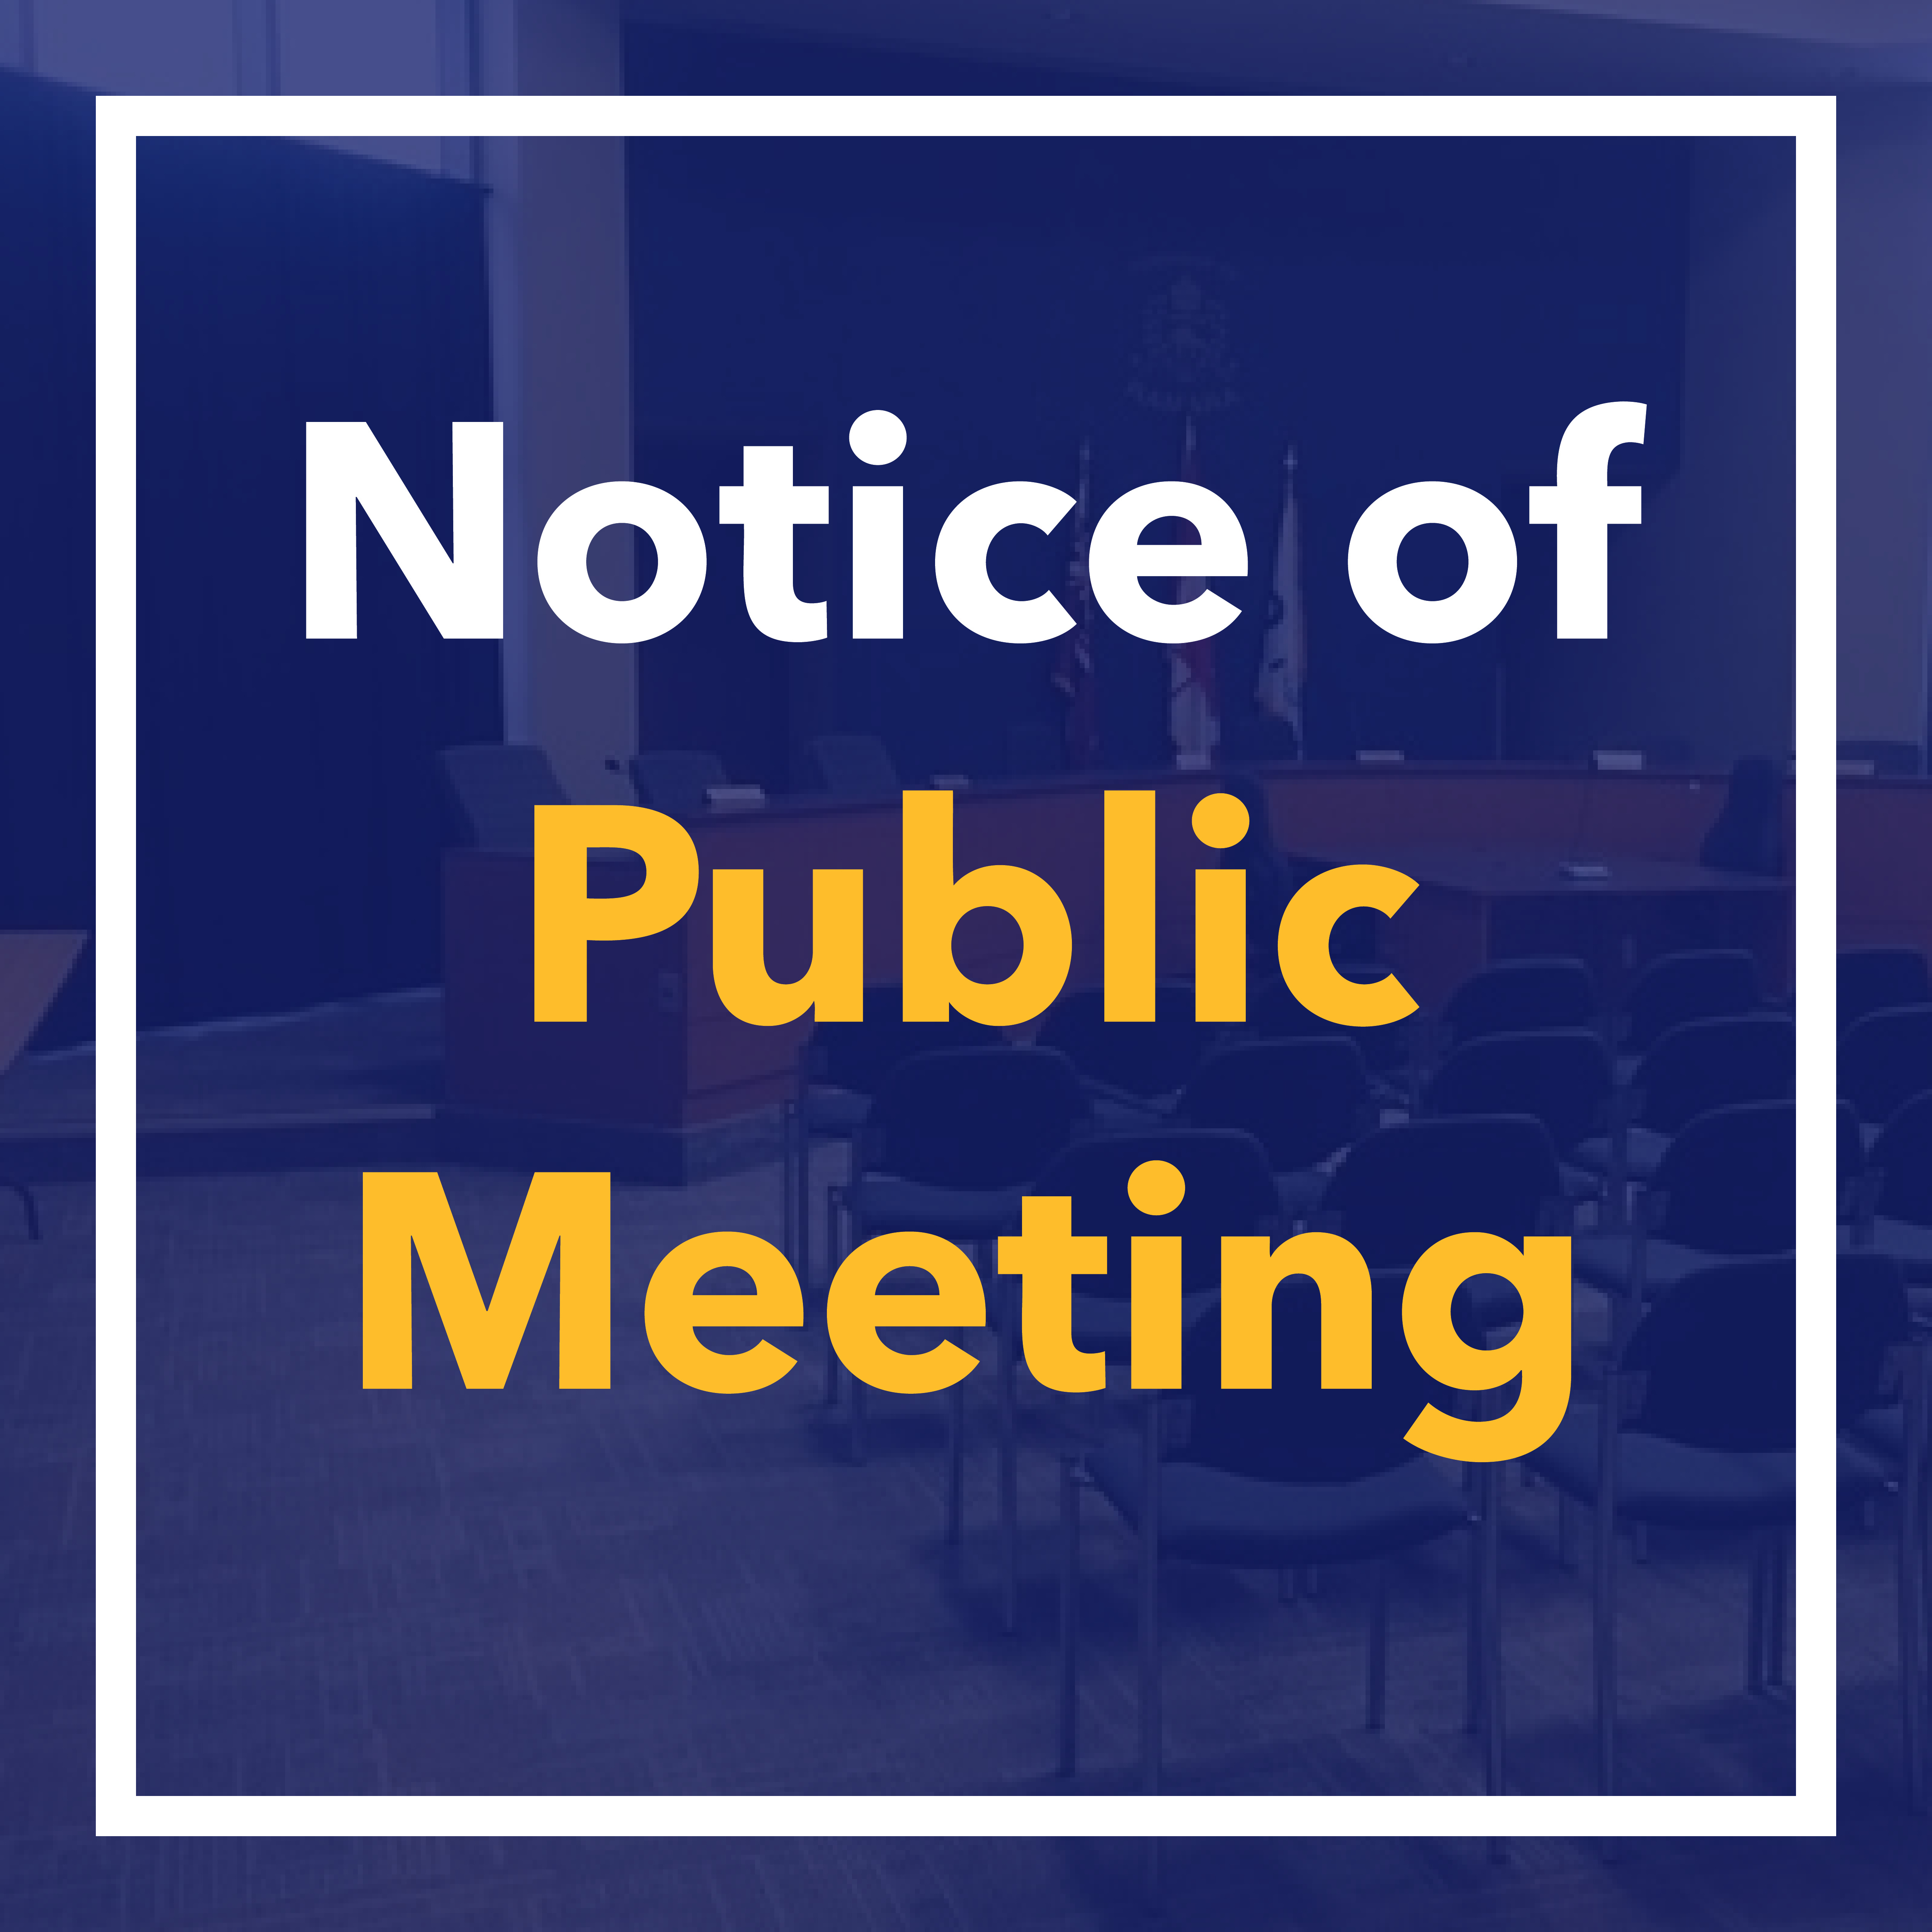 Notice of Public Meeting wording